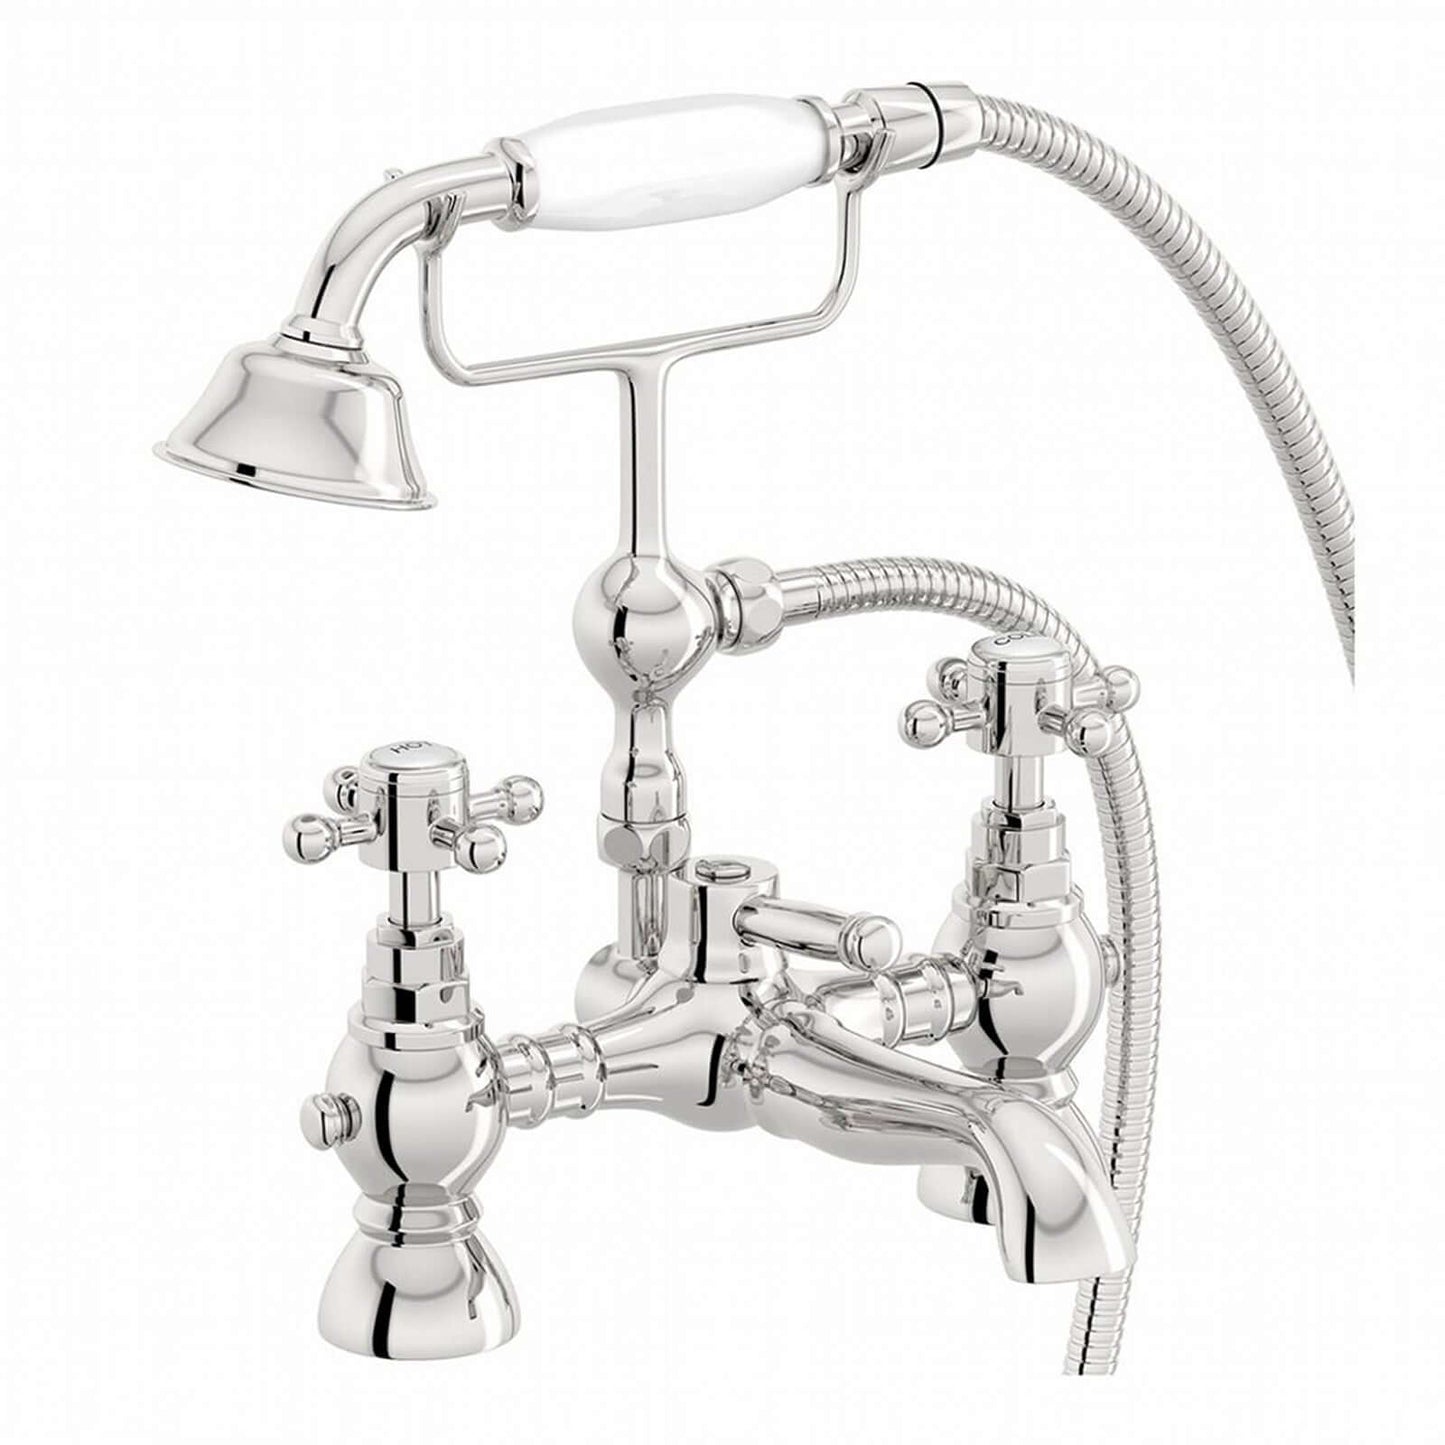 Camberley bath shower mixer tap + basin mixer tap pack - chrome - Taps